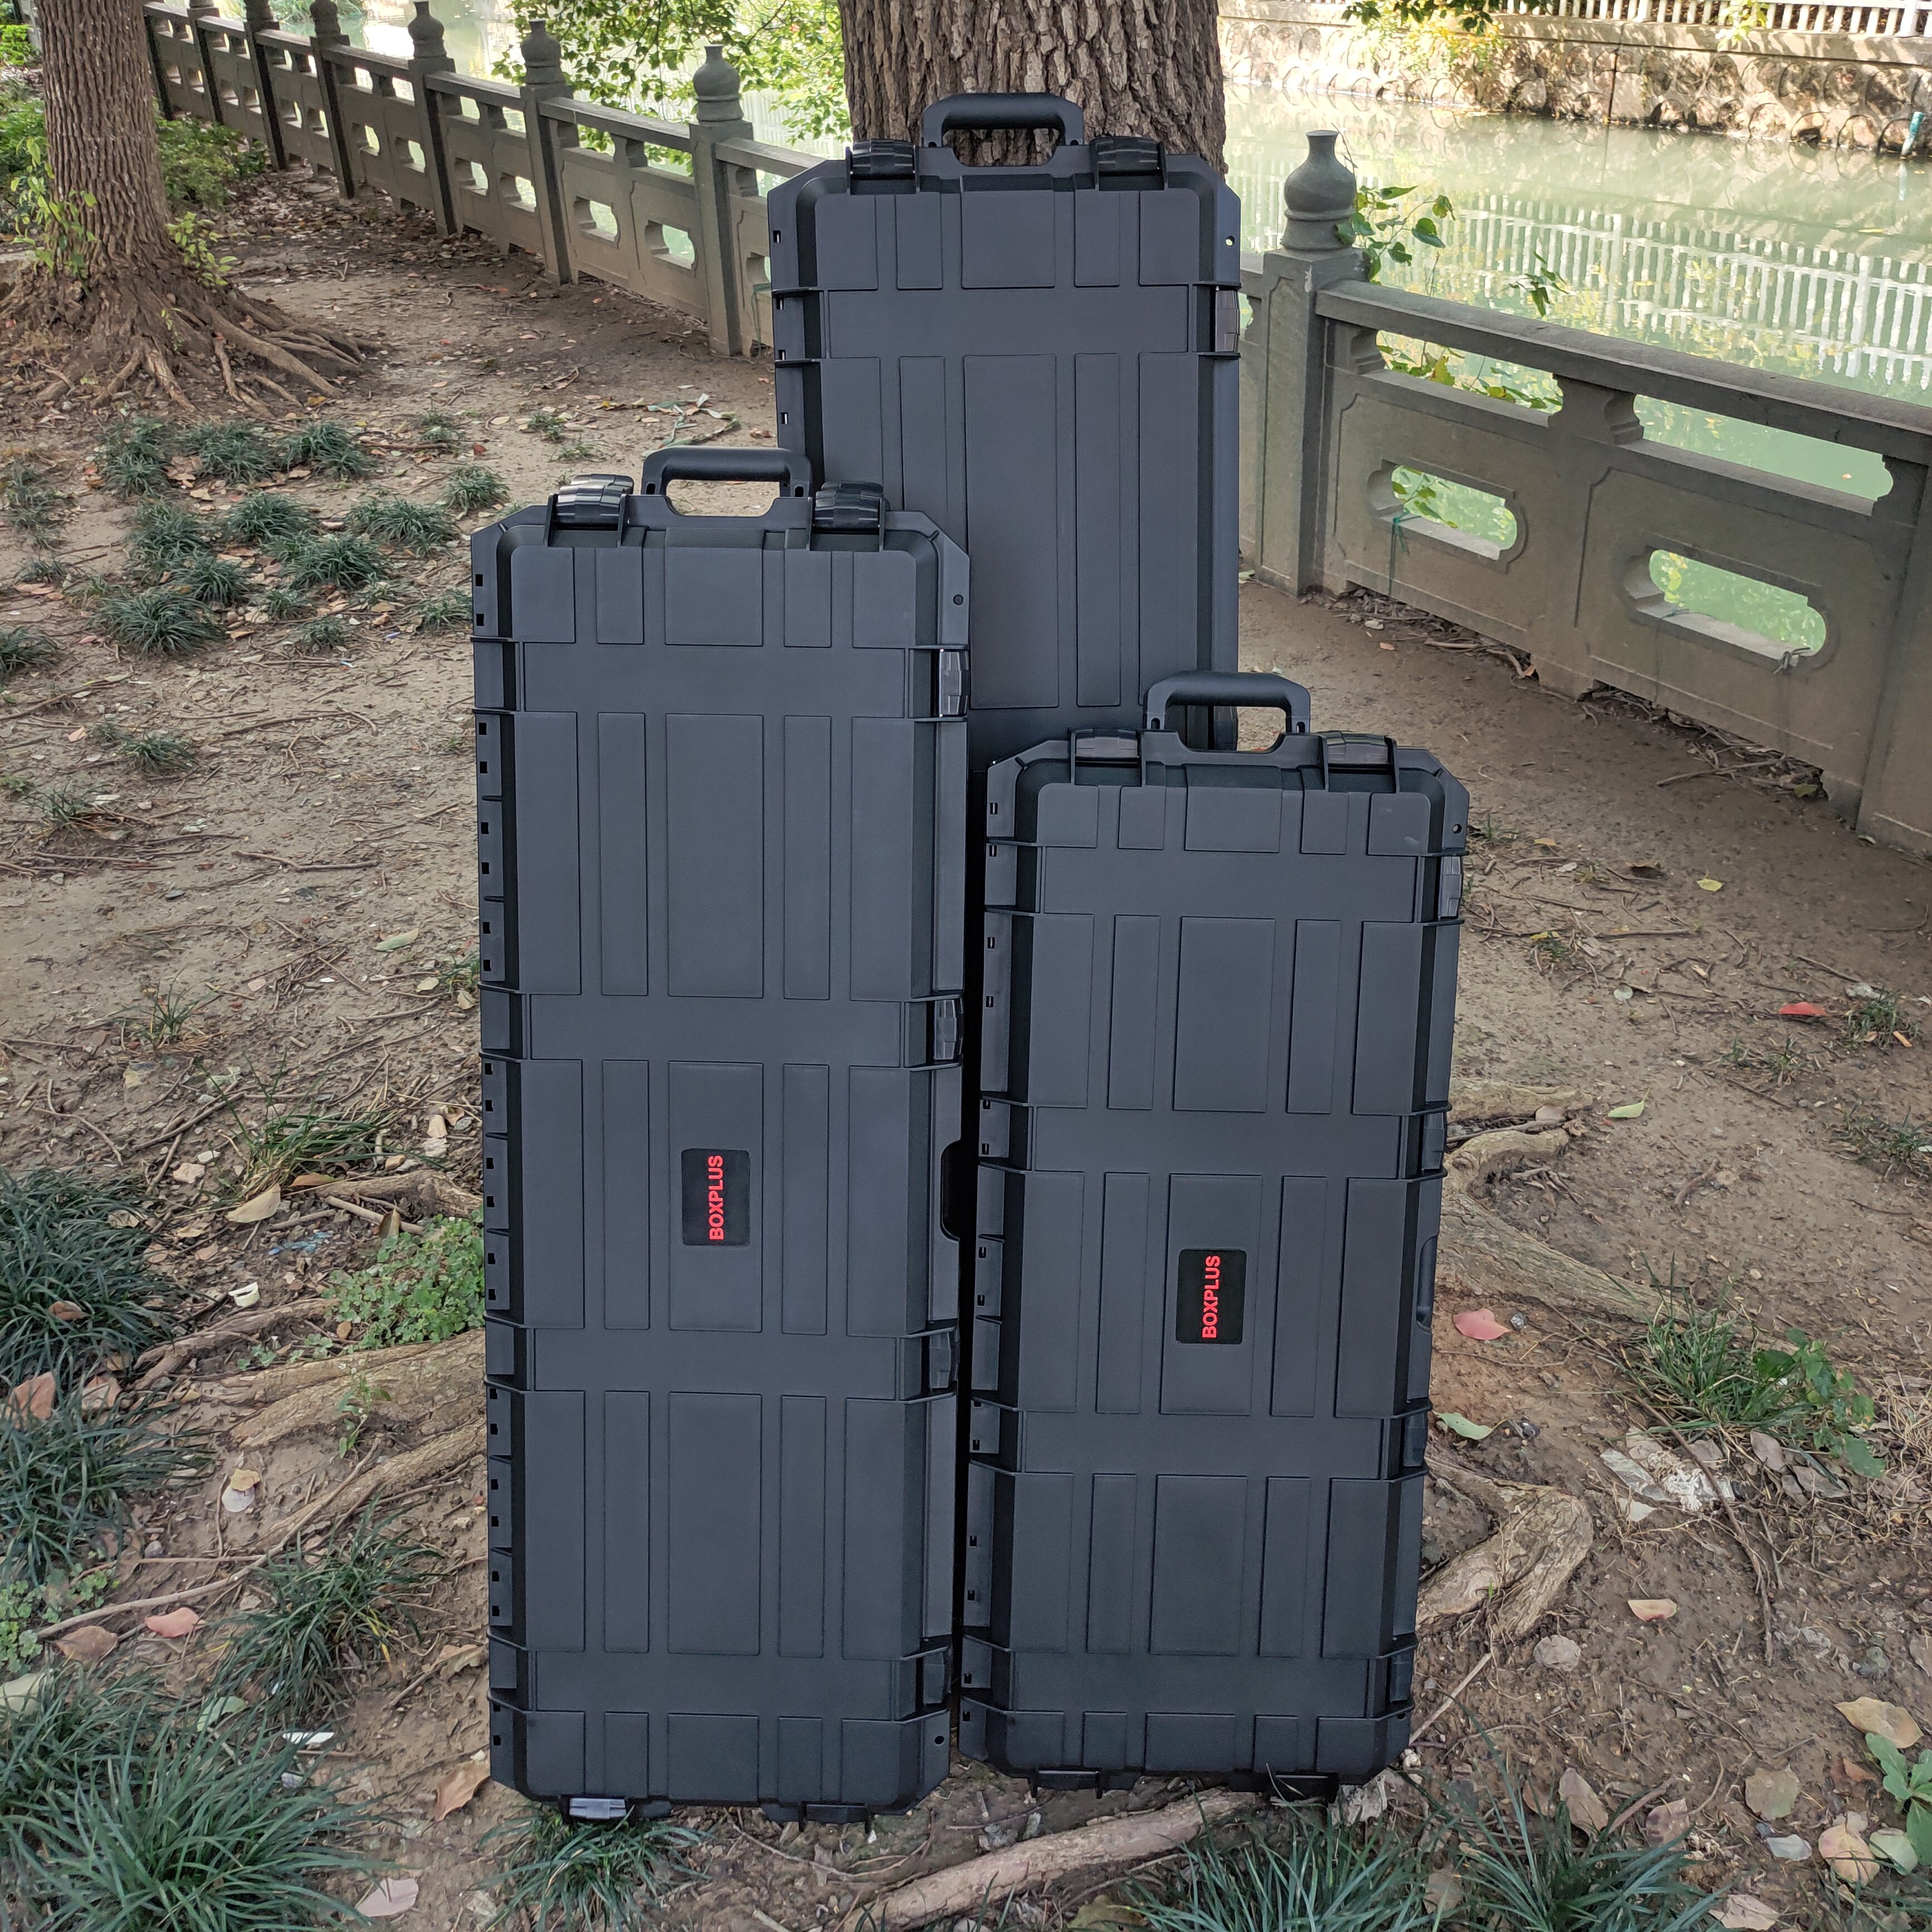 [BP-F13034][1278*340*130mm]Long hard carrying Case Waterproof plastic Gun Cases Waterproof plastic long case with wheels